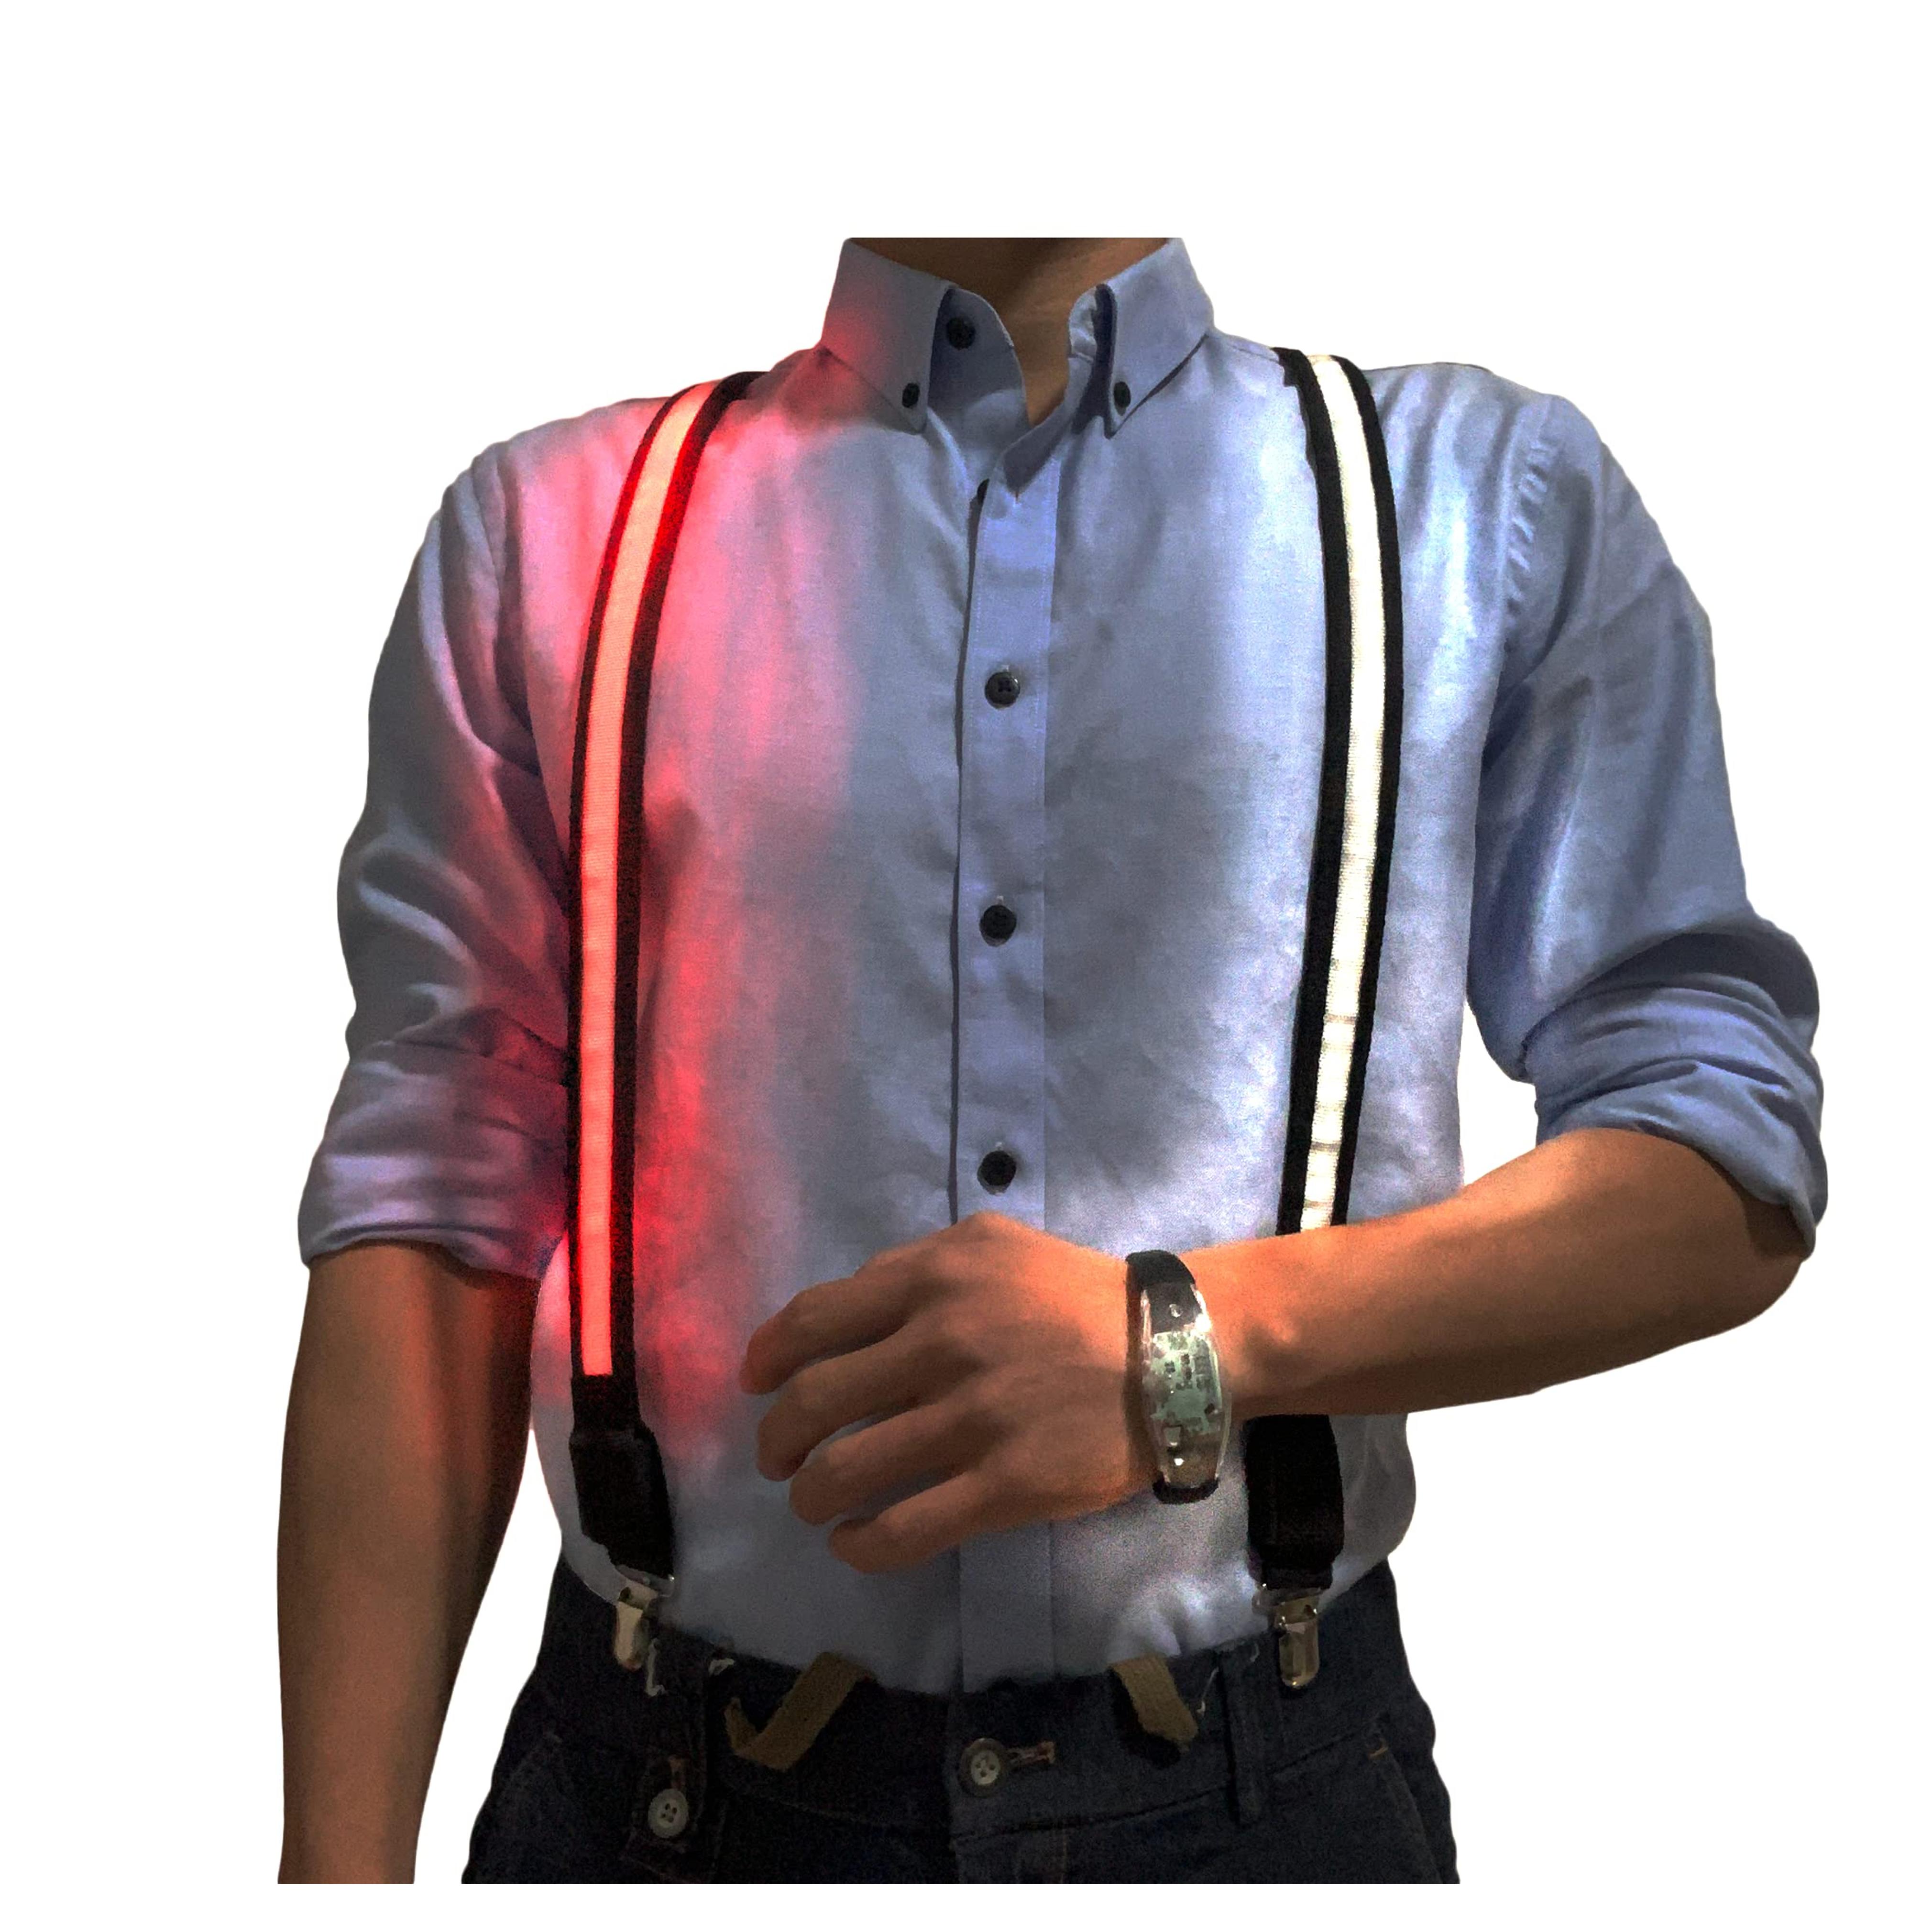 2 Pcs/Combo, Adjustable Elastic Light Up LED Suspenders And Music Rhythm Bracelet, Colorful Flashing Led Clothing for Men and Women, Blackblue at Amazon Men’s Clothing store